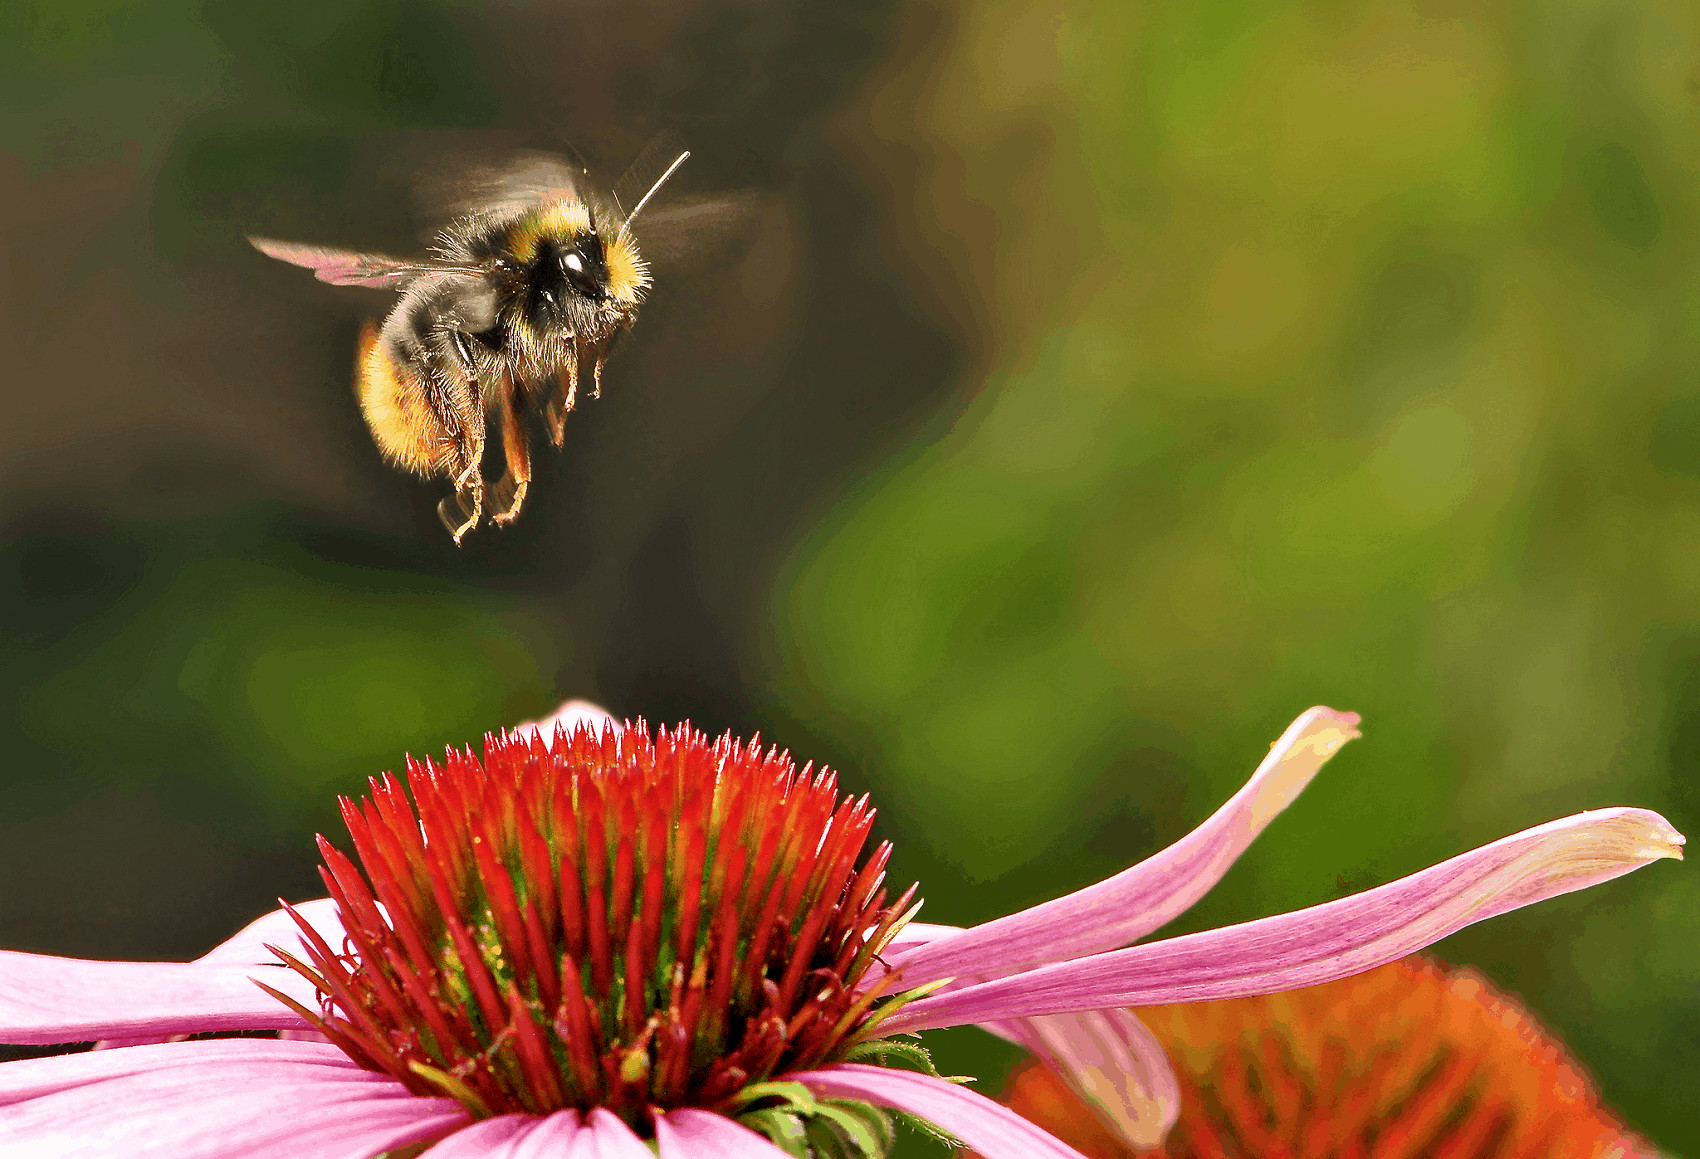 A bumblebee lands on an echinacea flower.